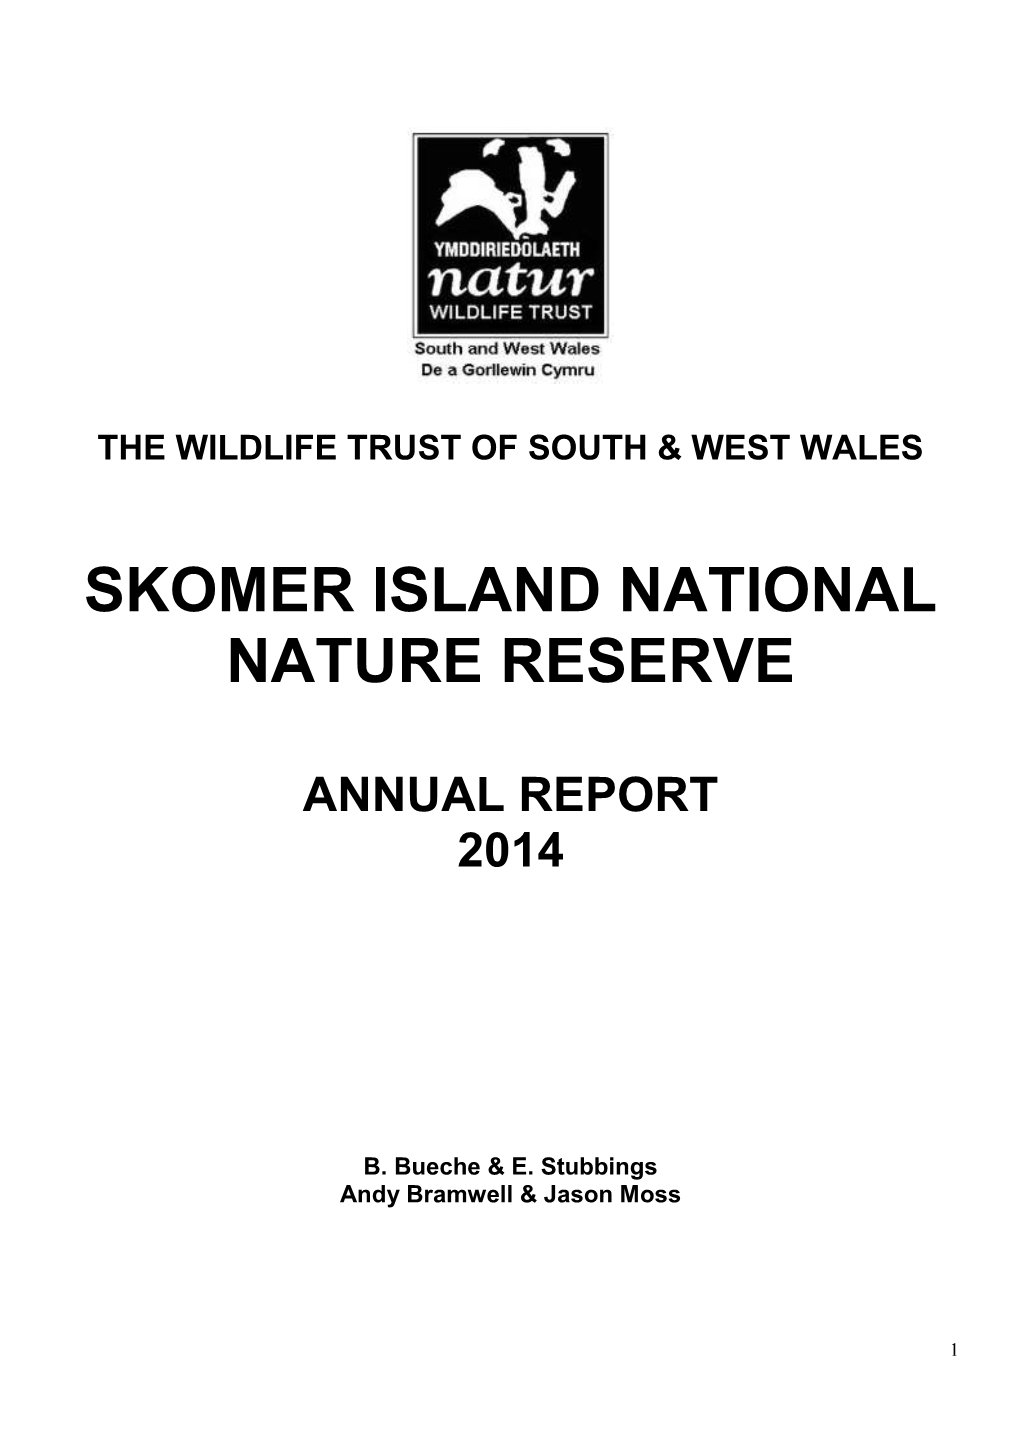 Skomer Island National Nature Reserve